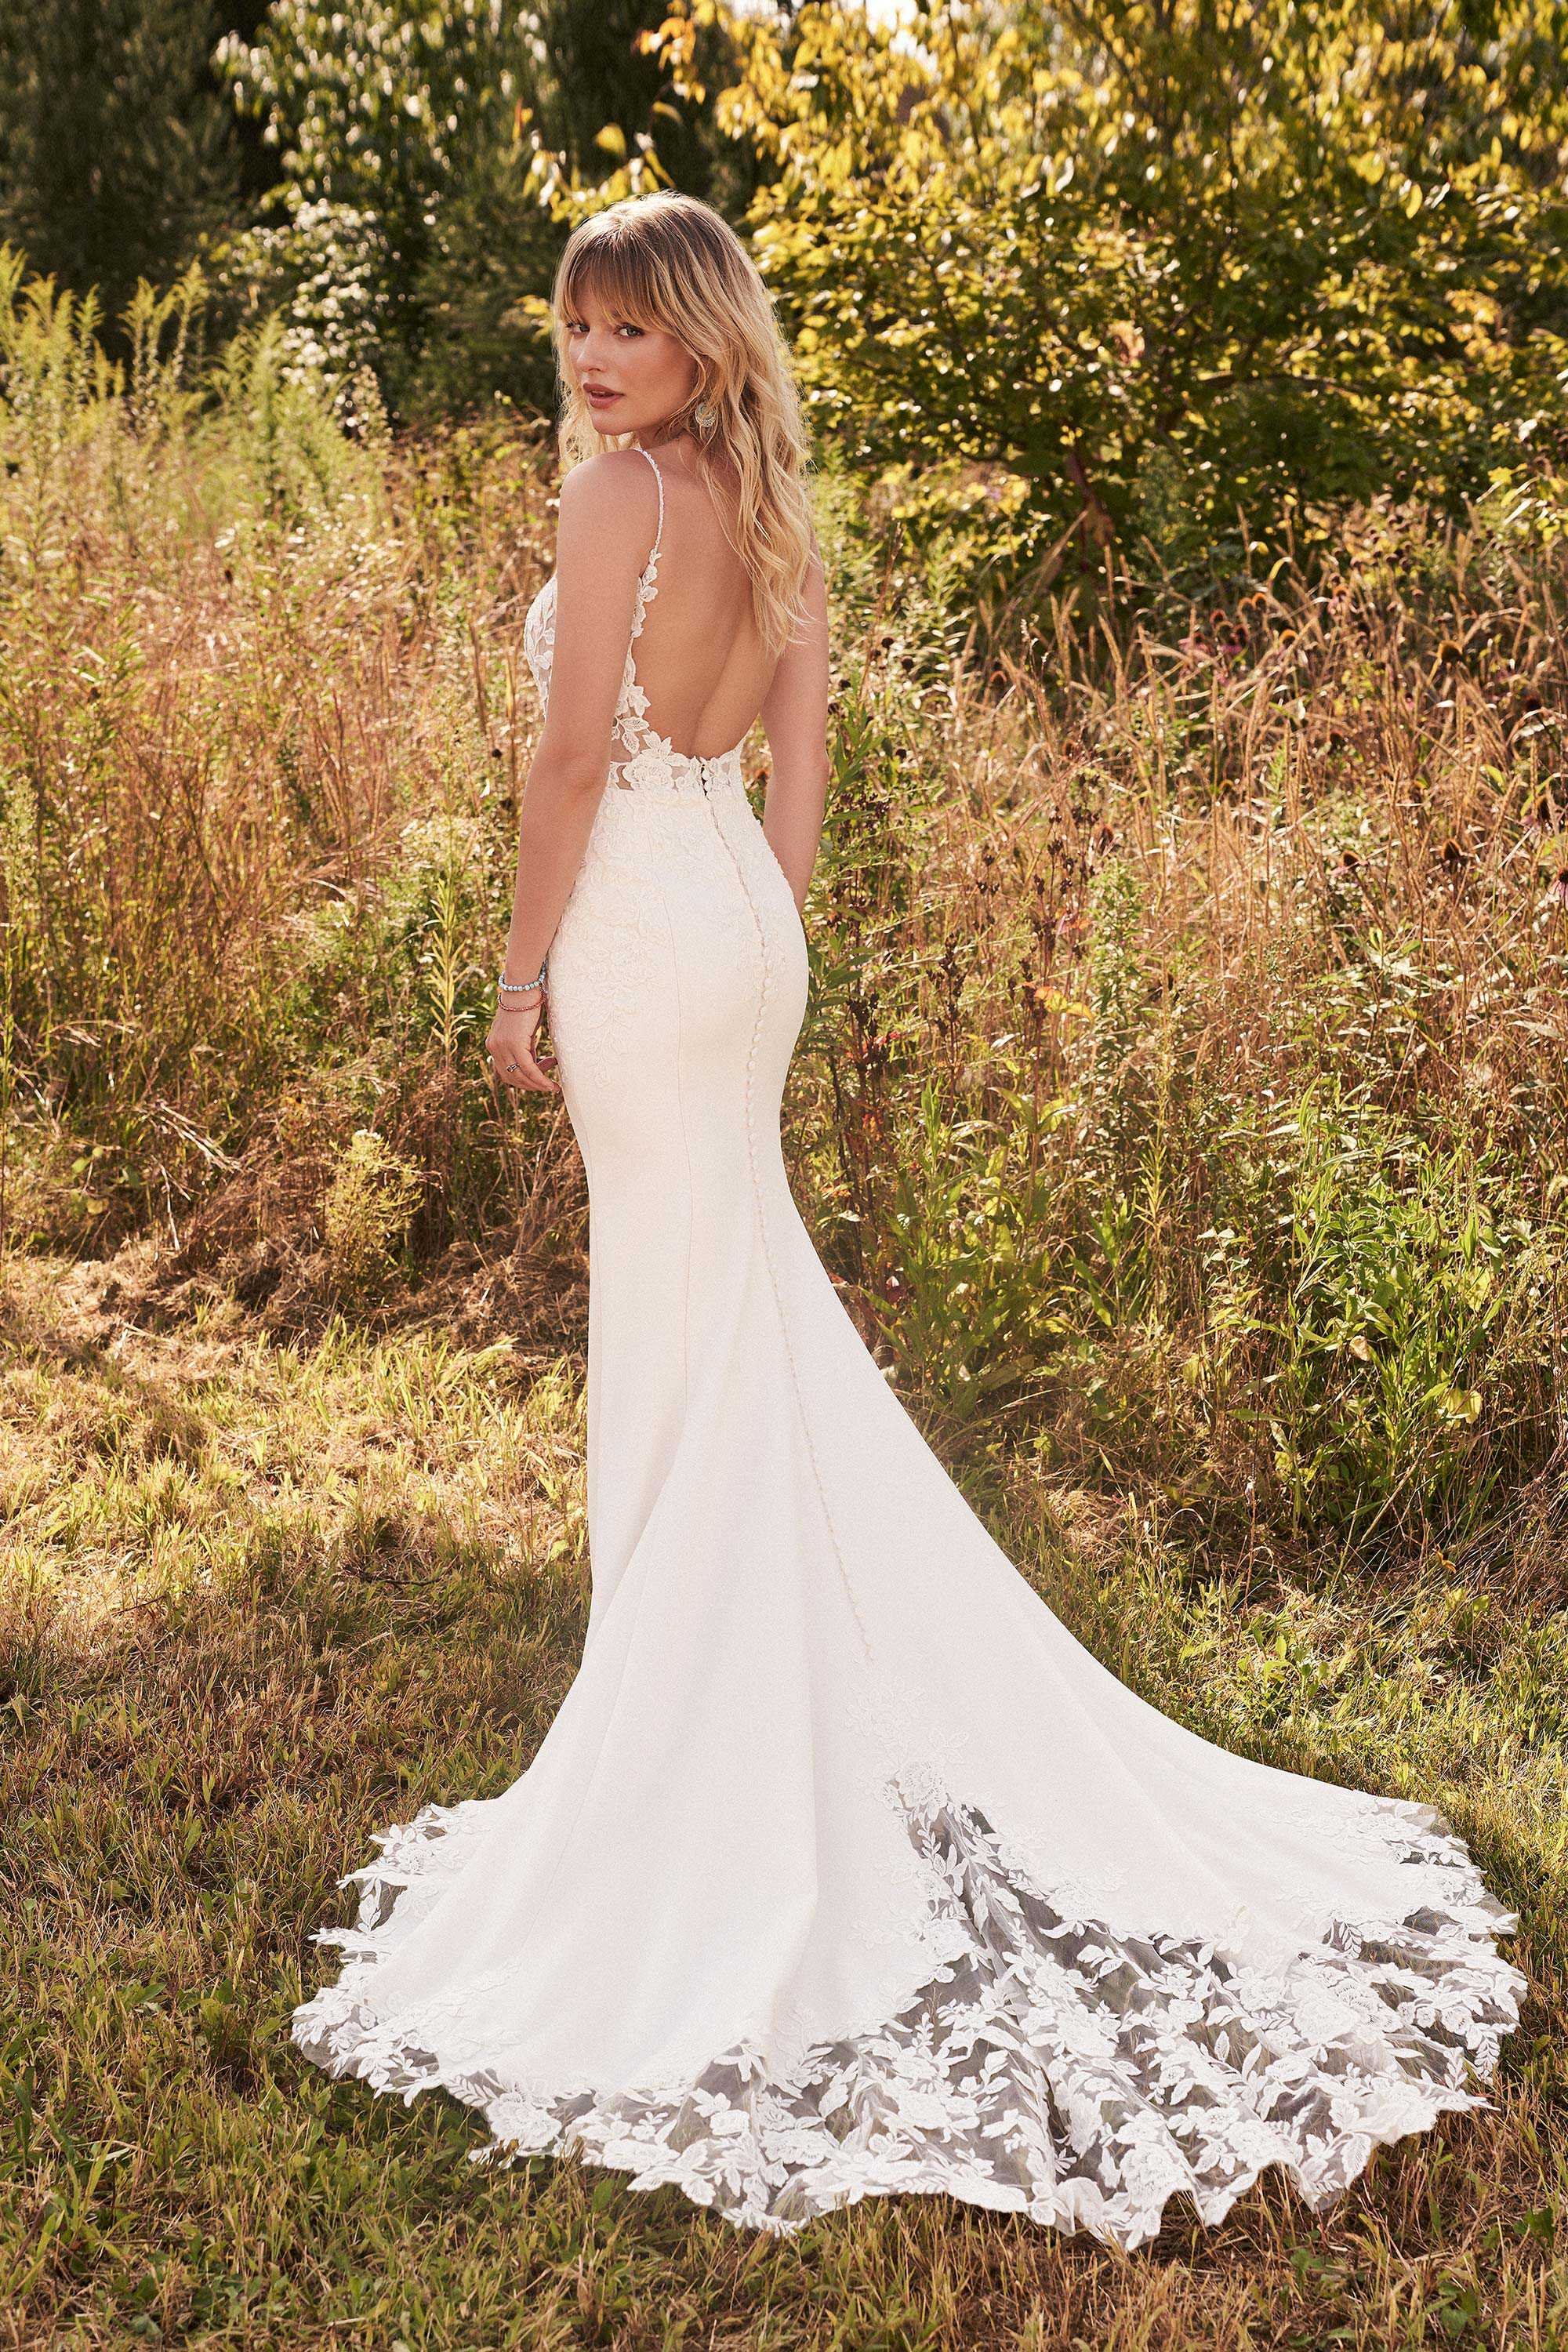 blanc-de-blanc-bridal-boutique-pittsburgh-cleveland-dress-wedding-gown-lillian-west-66180.jpeg